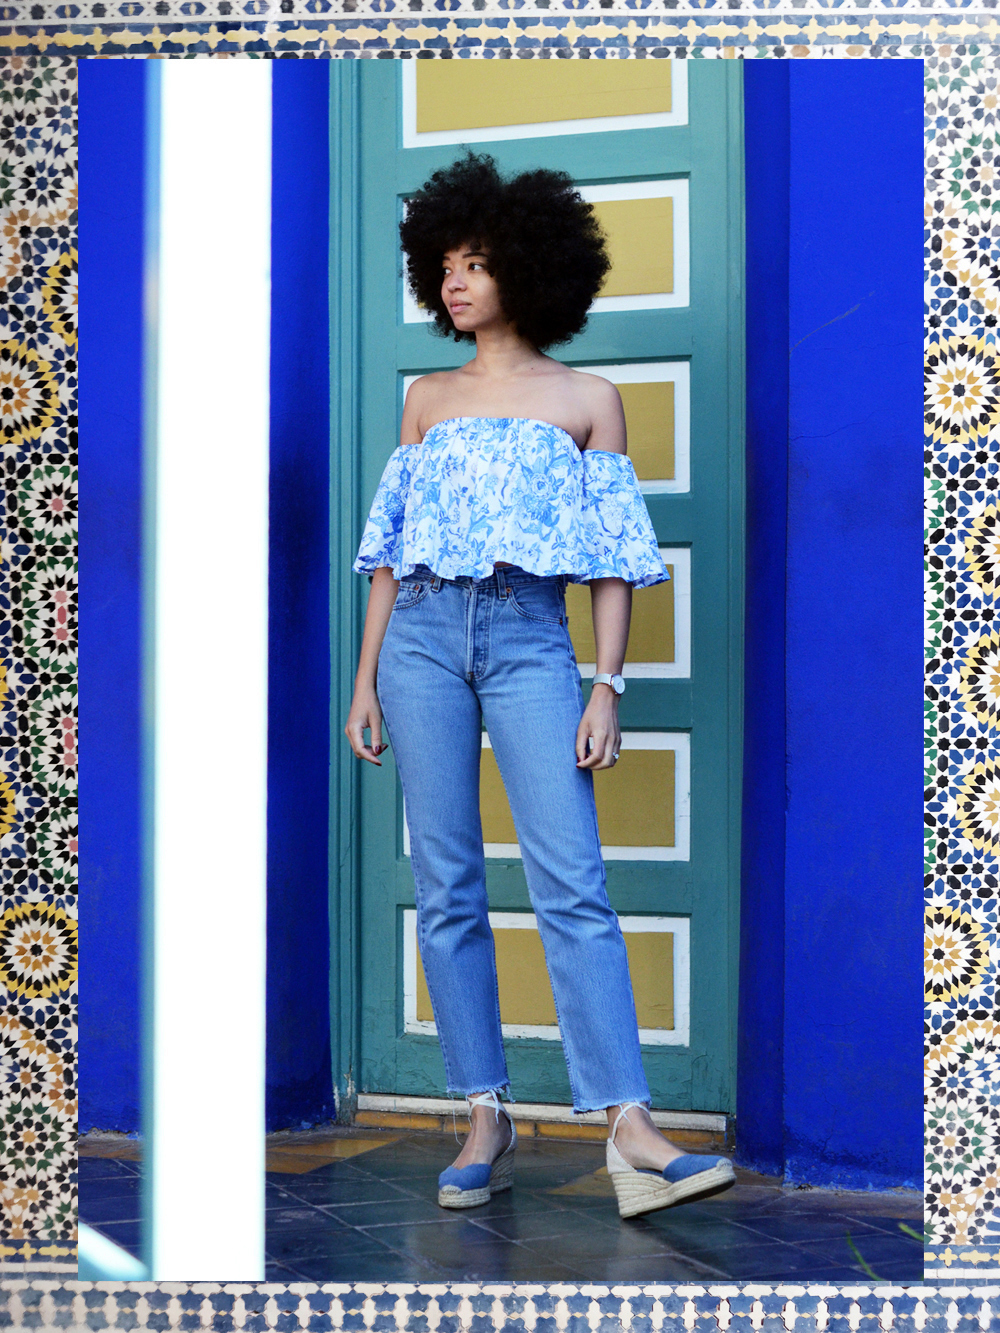 1-mercredie-blog-mode-geneve-suisse-blogueuse-bloggeuse-geneva-swiss-maroc-marocco-trip-marrakech-marrakesh-majorelle-jardin-fashion